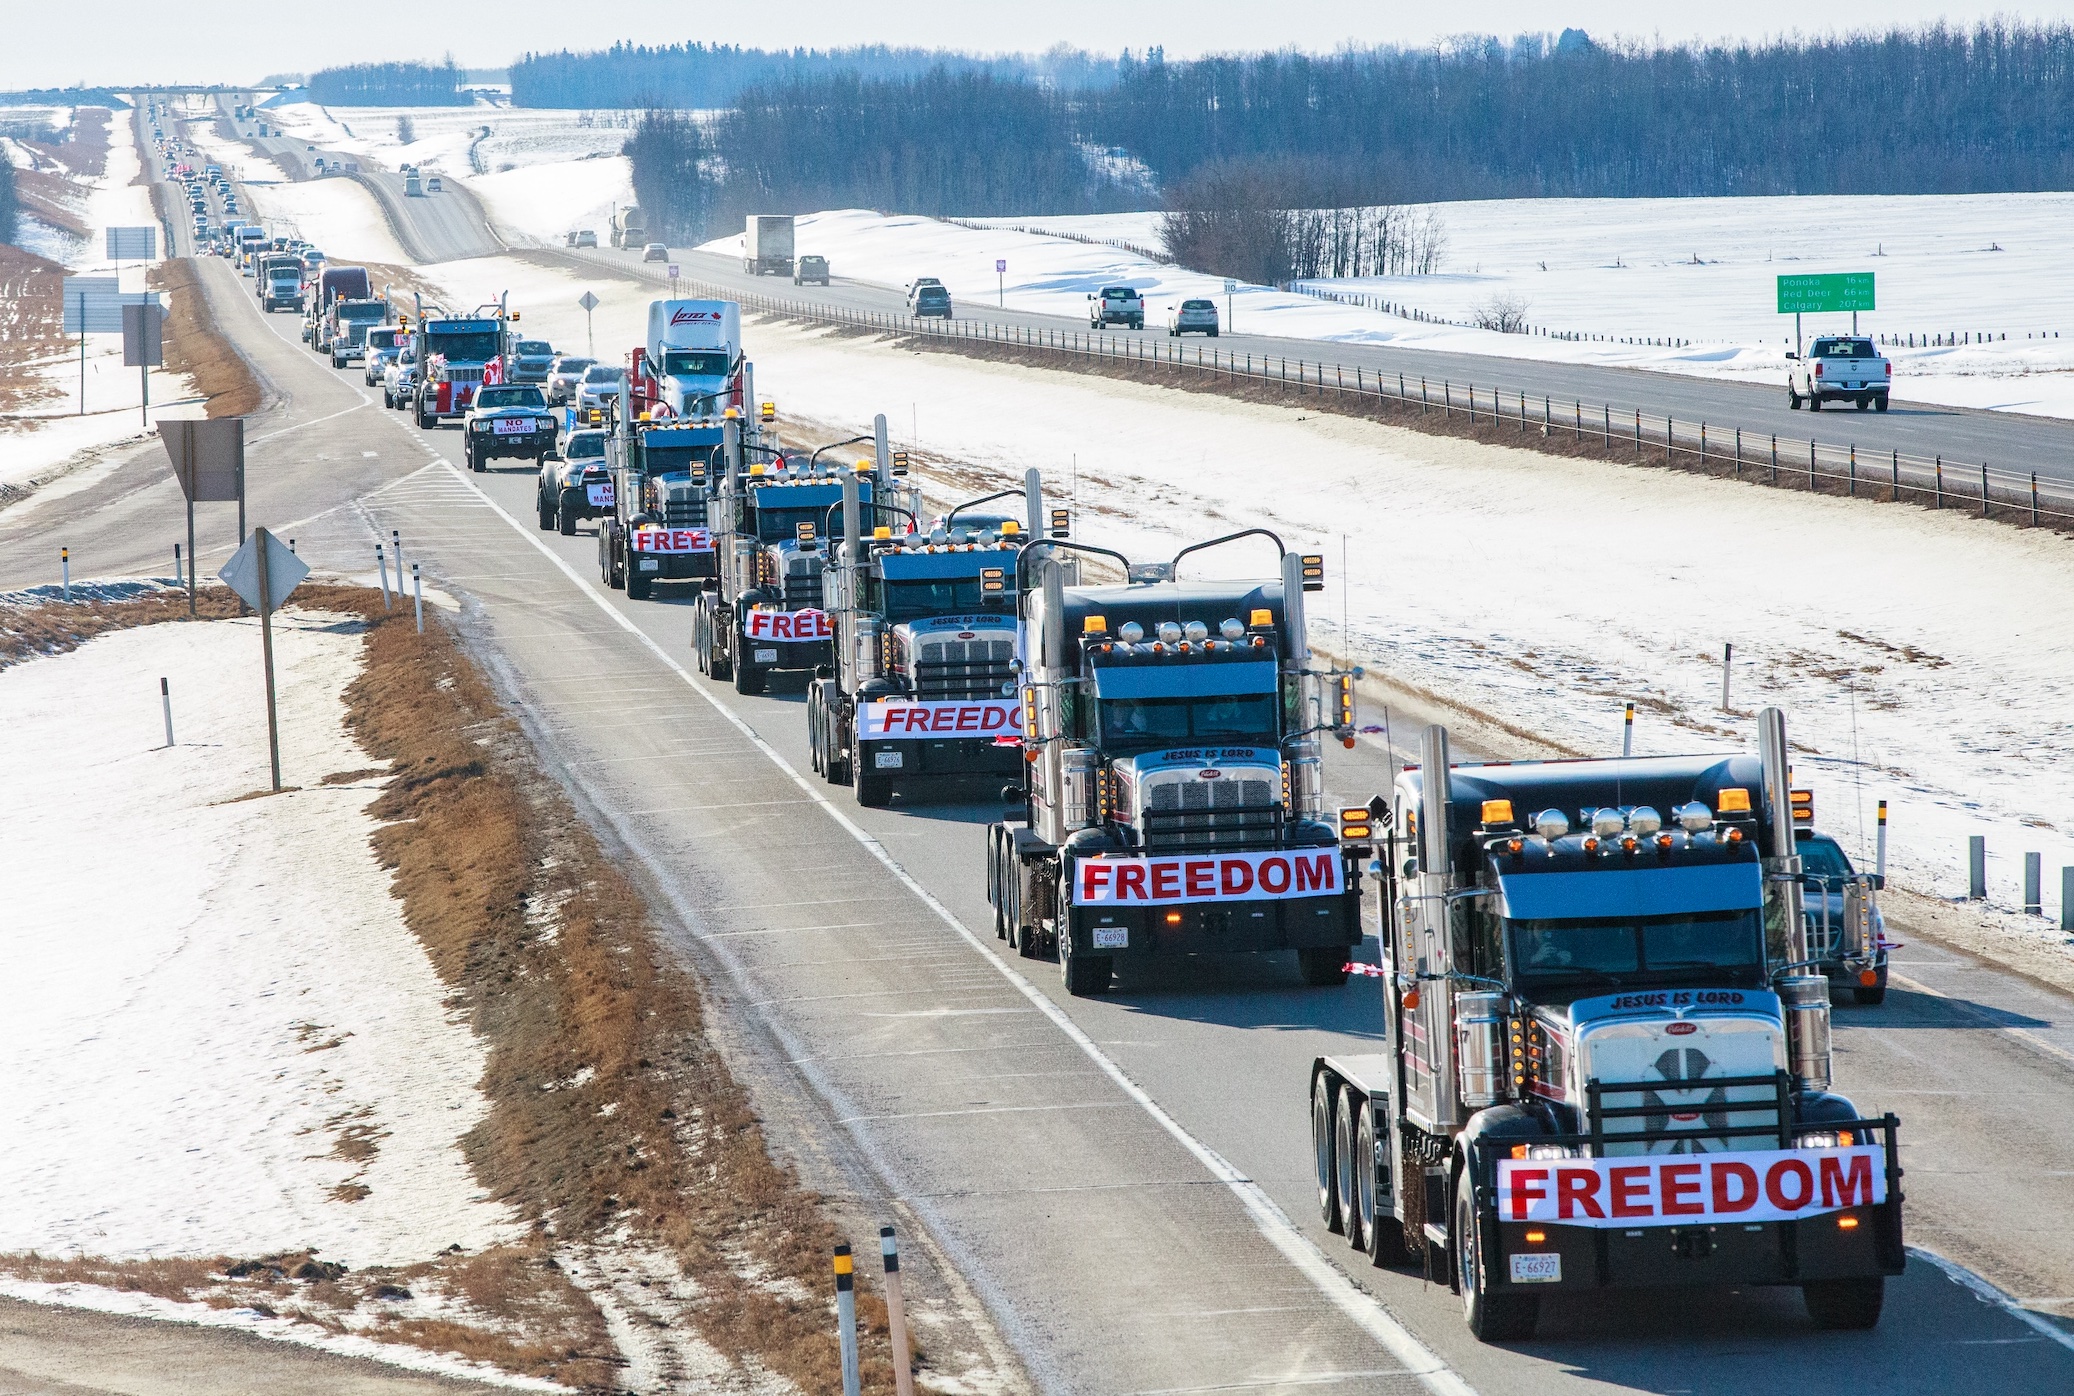 FREEDOM convoy taken in Central Alberta on their way to the Legislature Building; image by Naomi Mckinney, via Unsplash.com.